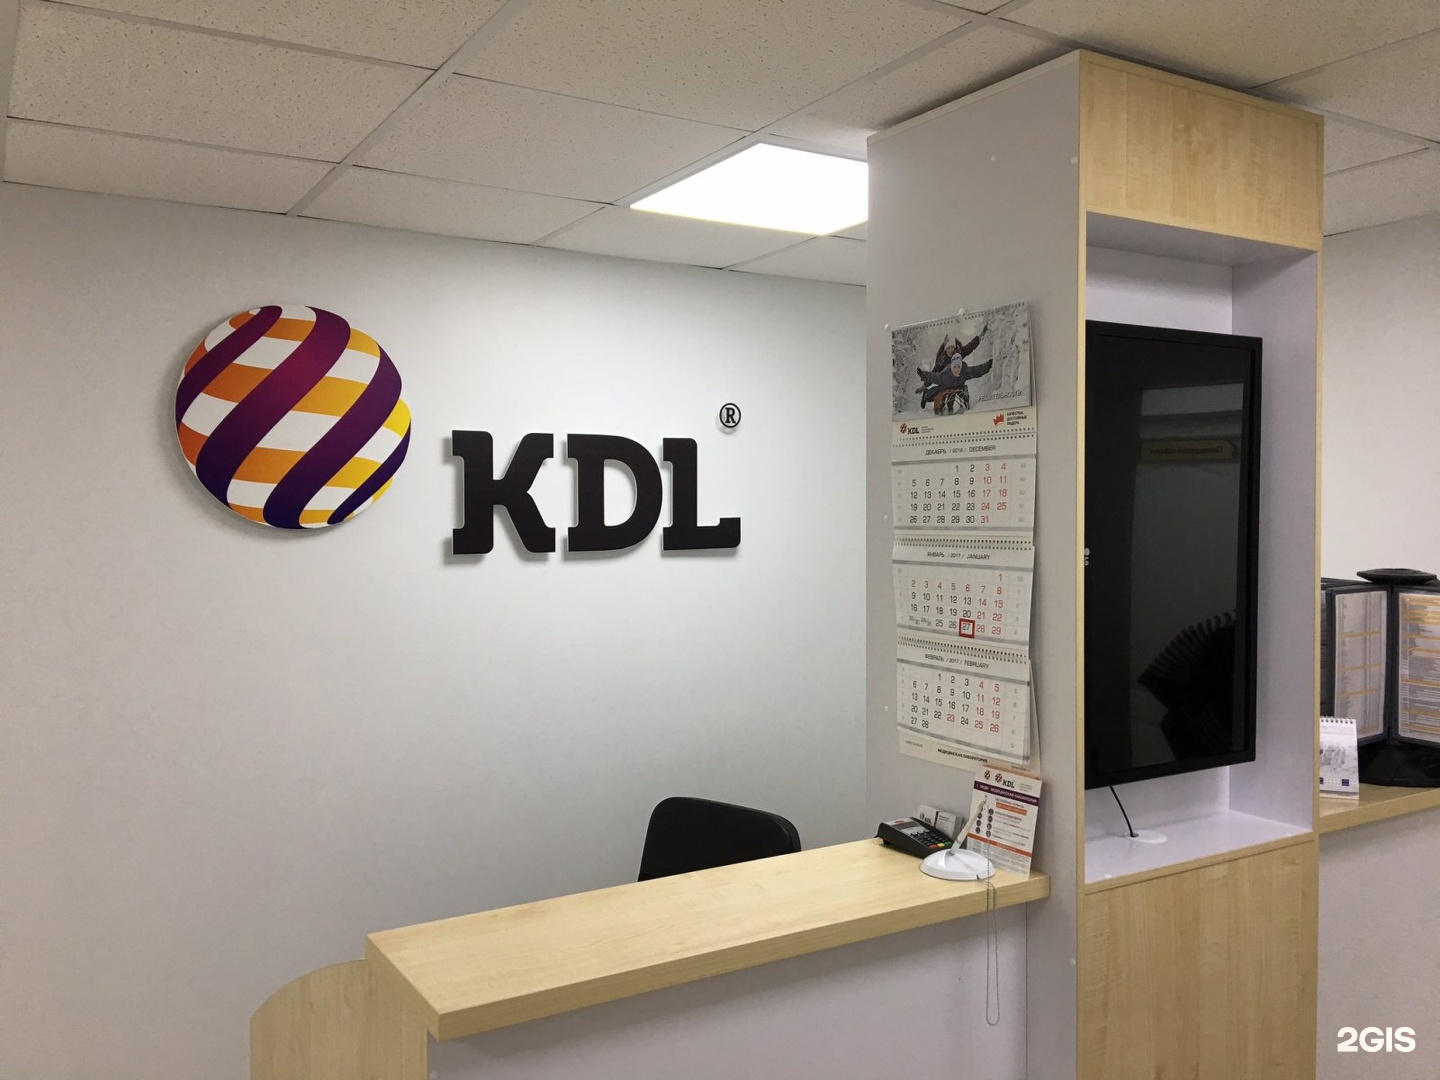 Кдл 11. КДЛ лаборатория Омск. KDL логотип. Эмблема КДЛ лаборатории. KDL В Омске.